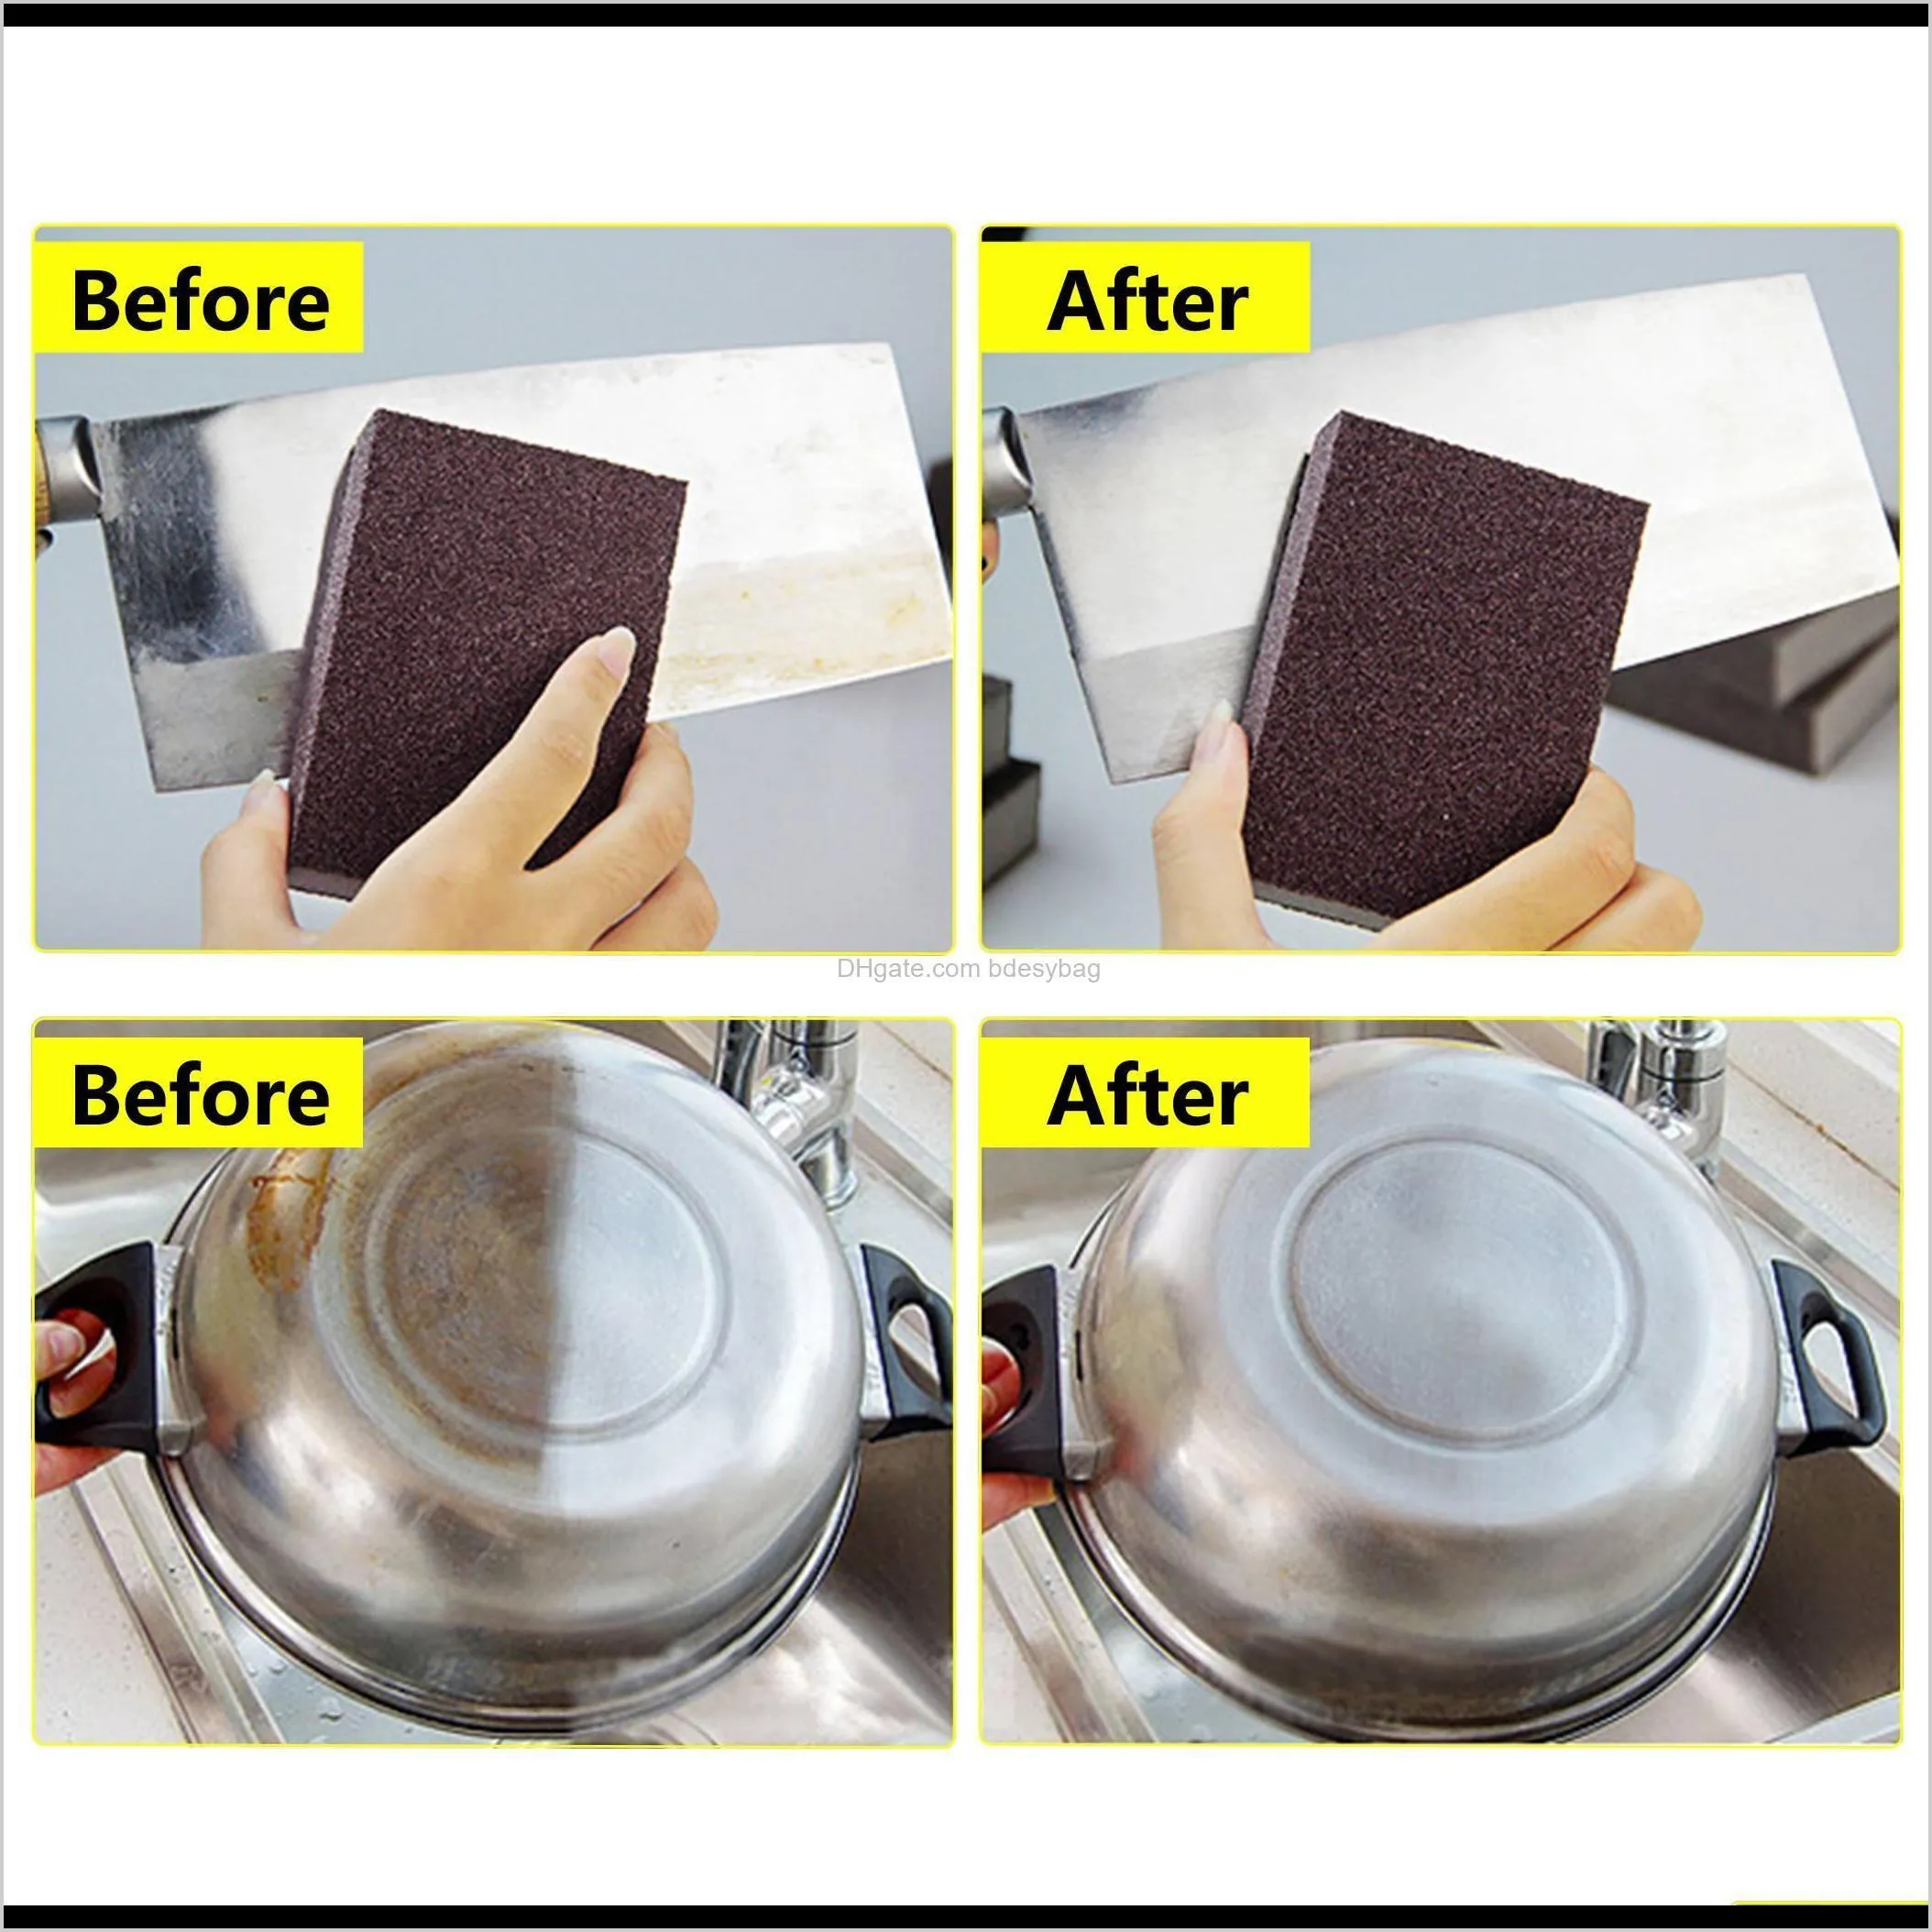 lots emery nano sponge powder eraser removing rust rub cleaning kitchen brush tool 10x7x2.5cm - brown